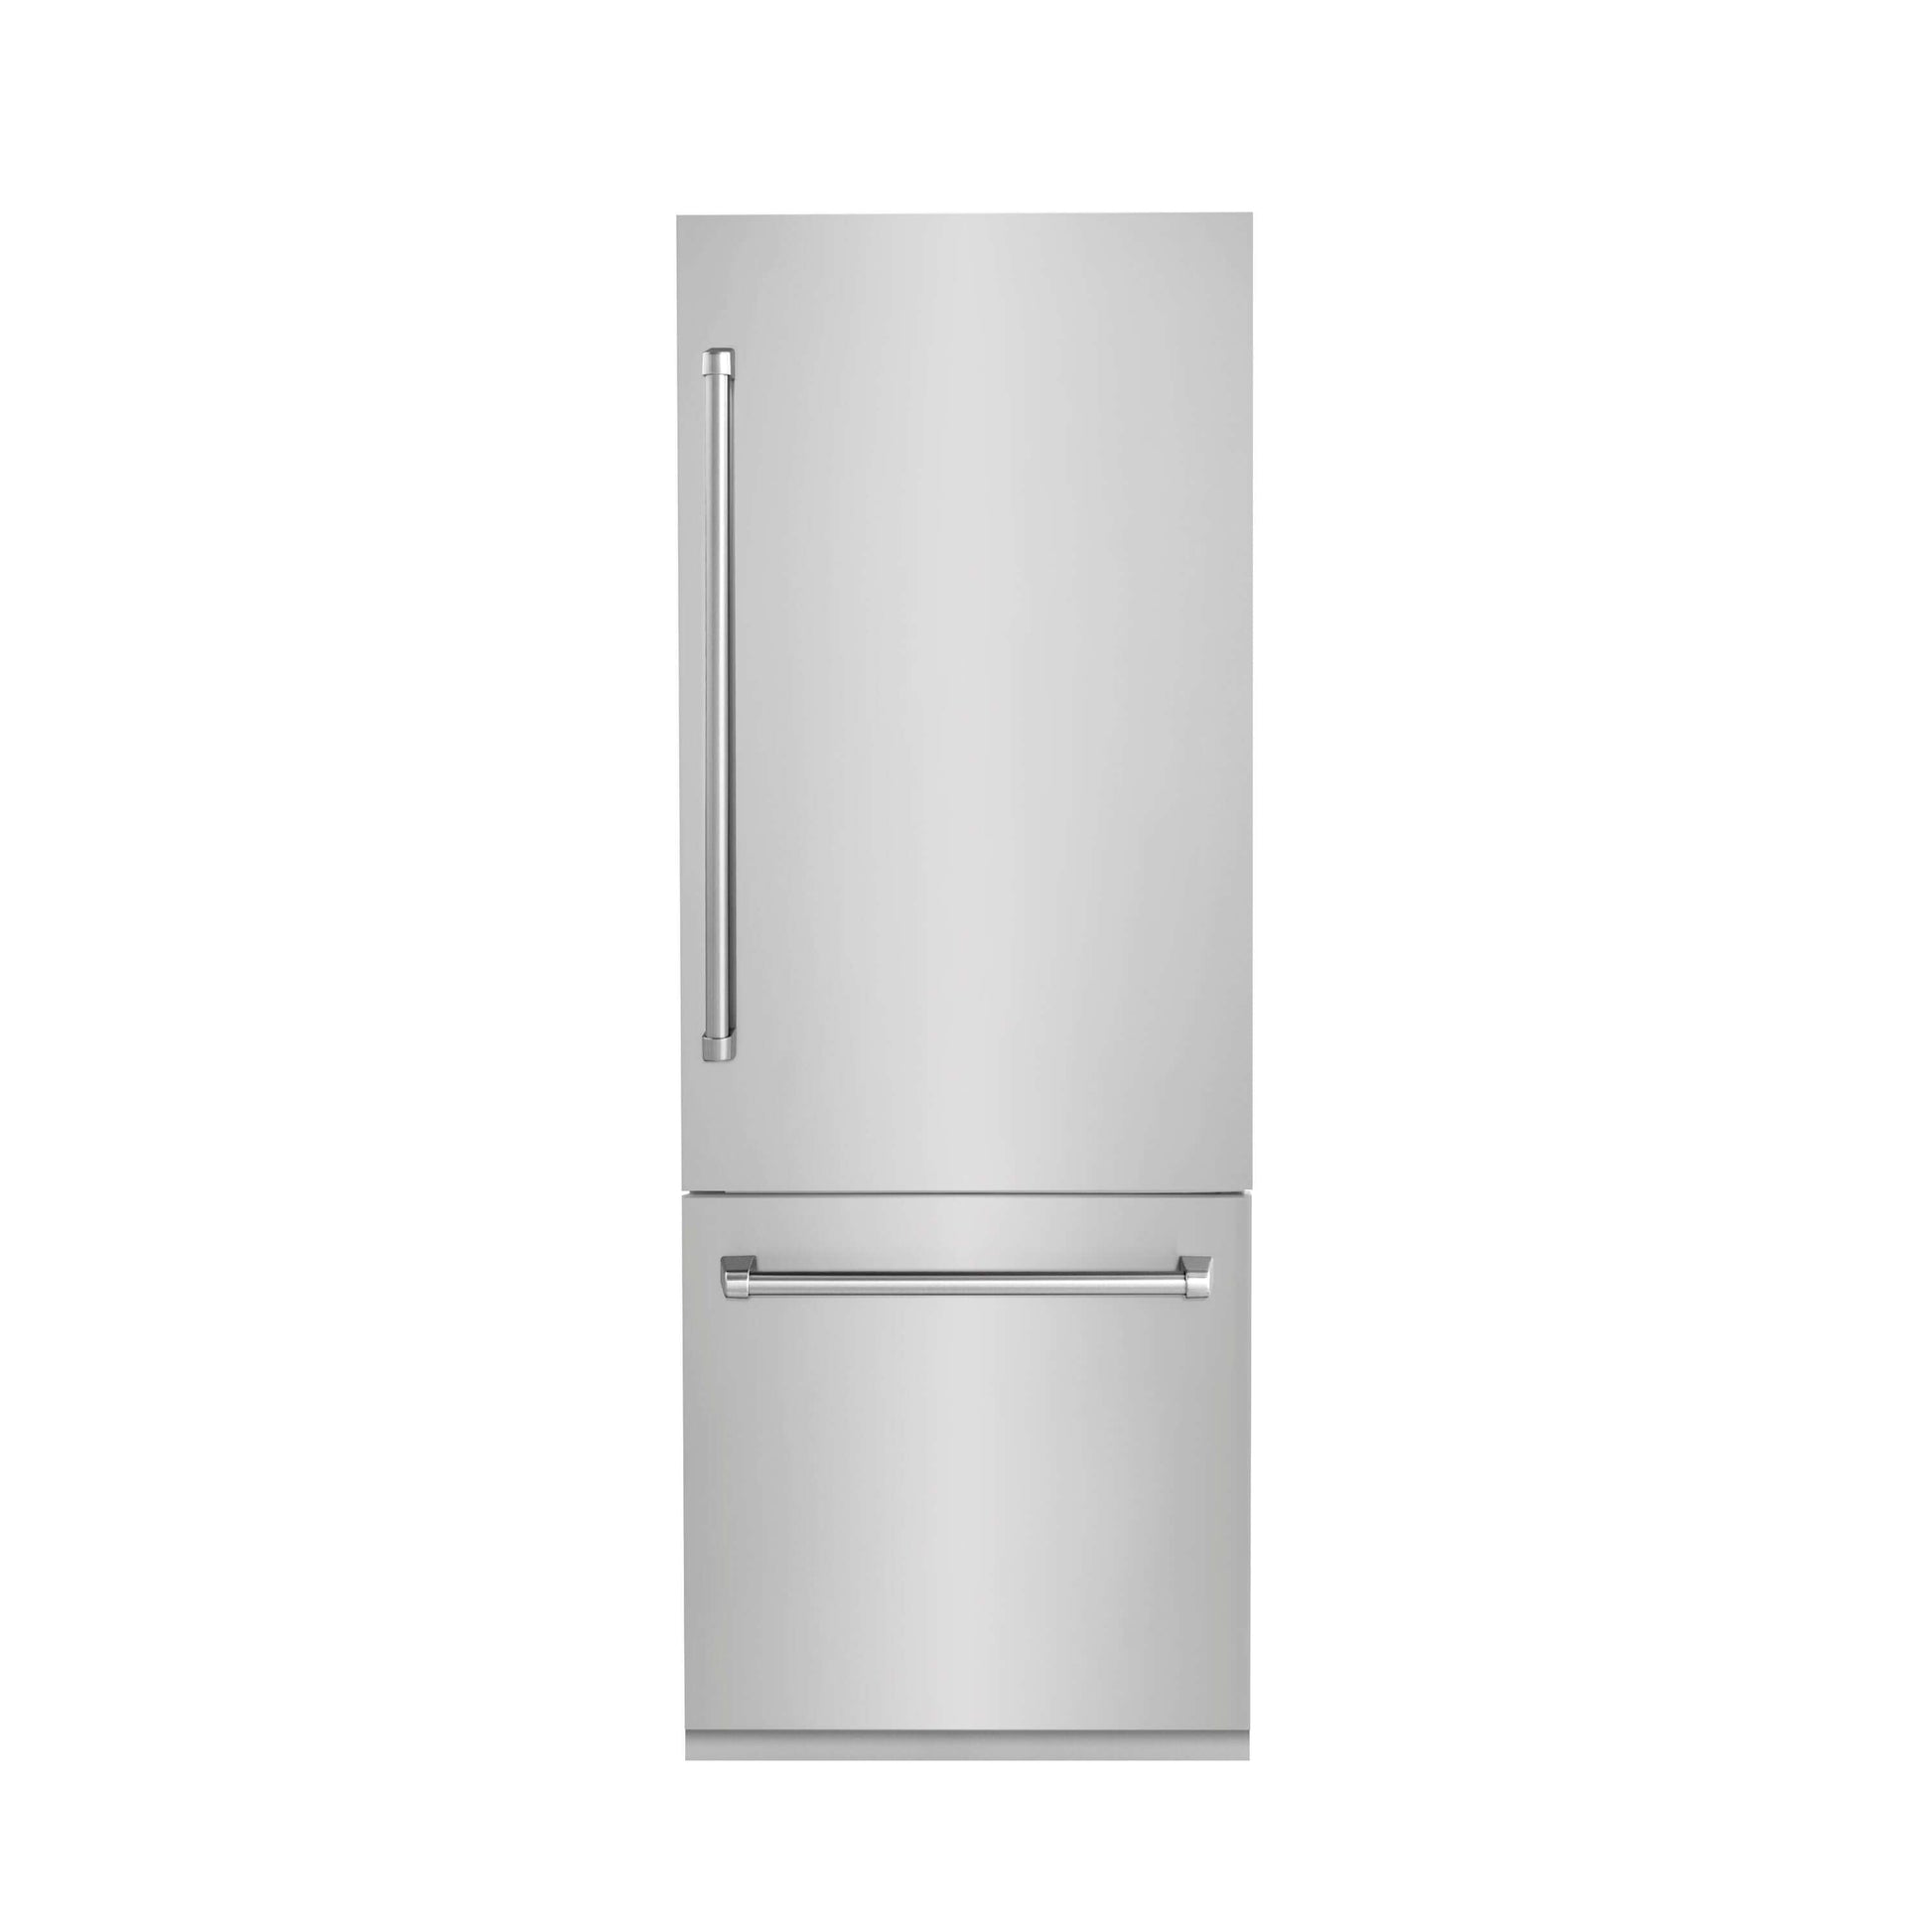 ZLINE 30 in. 16.1 cu. ft. Built-In 2-Door Bottom Freezer Refrigerator with Internal Water and Ice Dispenser in Stainless Steel (RBIV-304-30) front.